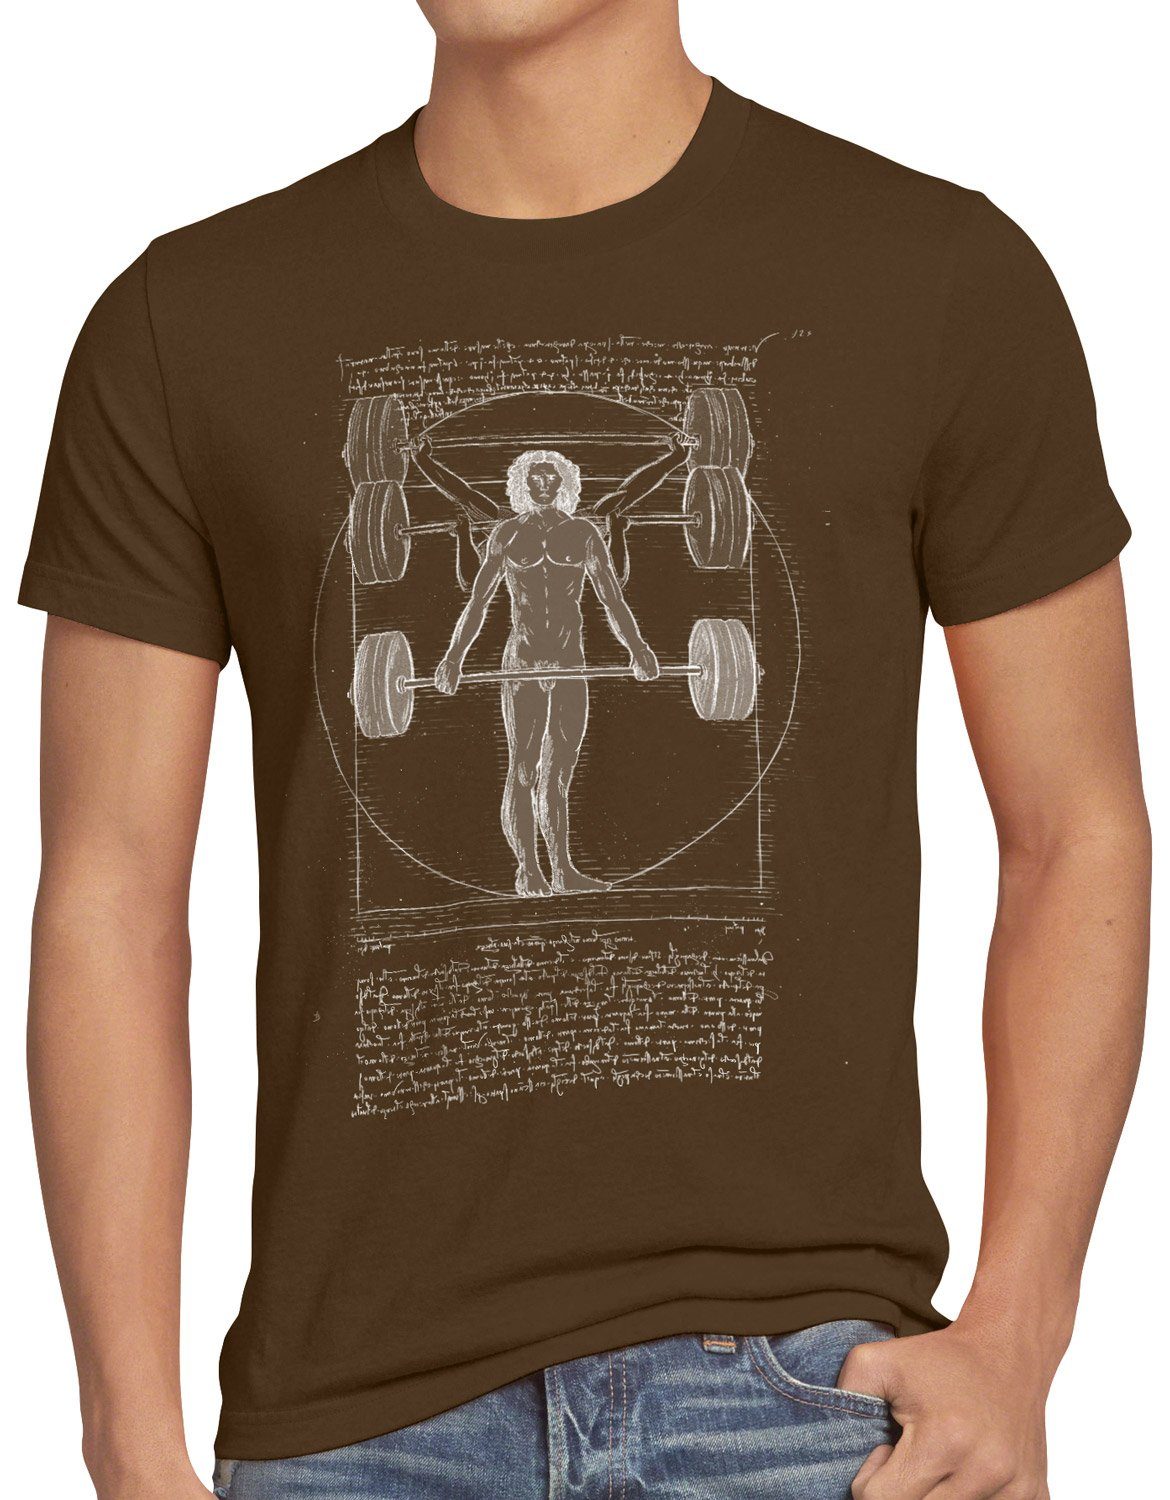 style3 Langhantel Vitruvianischer mit kreuzheben Print-Shirt T-Shirt Mensch Herren braun fitnesstudio